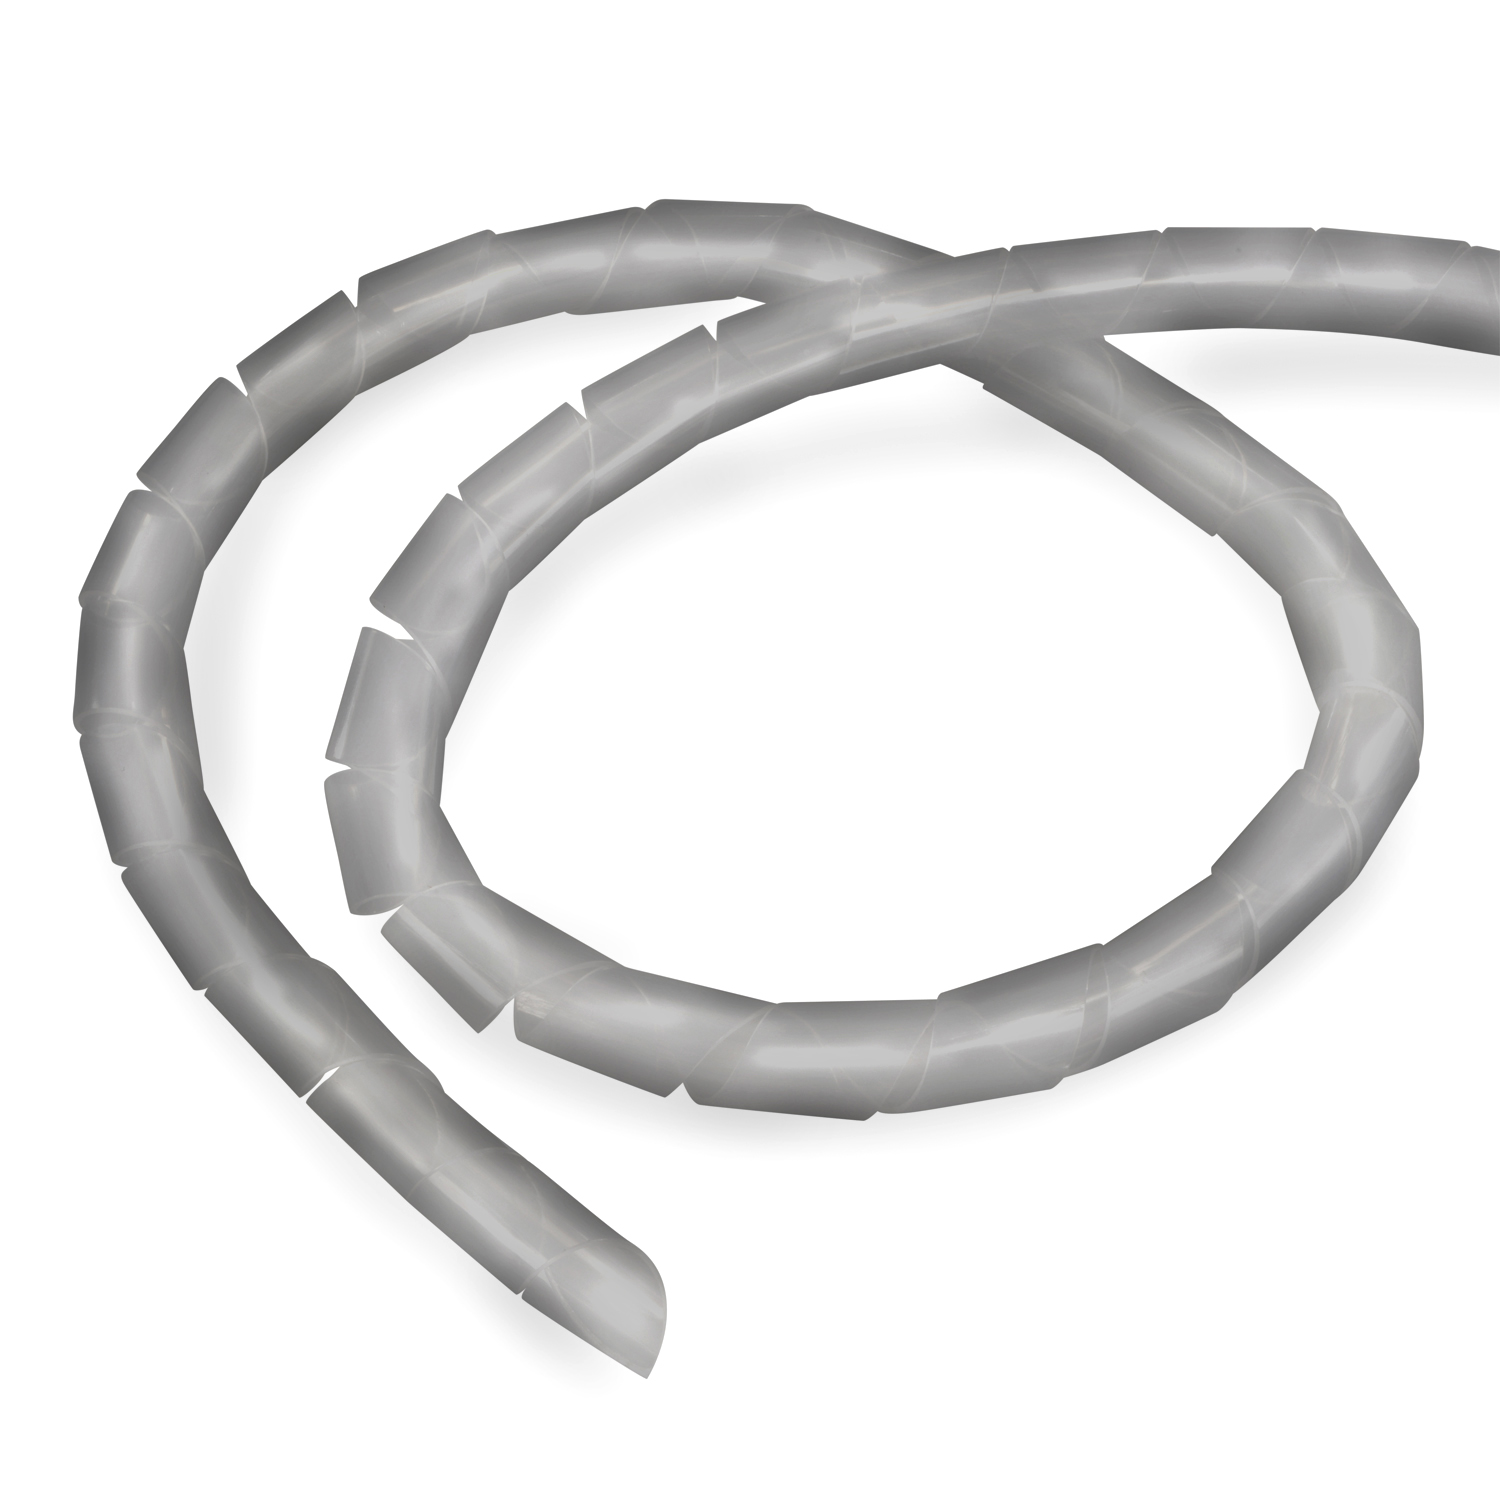 TPFNET 3er Pack Kabelschlauch, 4-50mm, Spiral-Kabelschlauch Silber, 10m Premium Silber